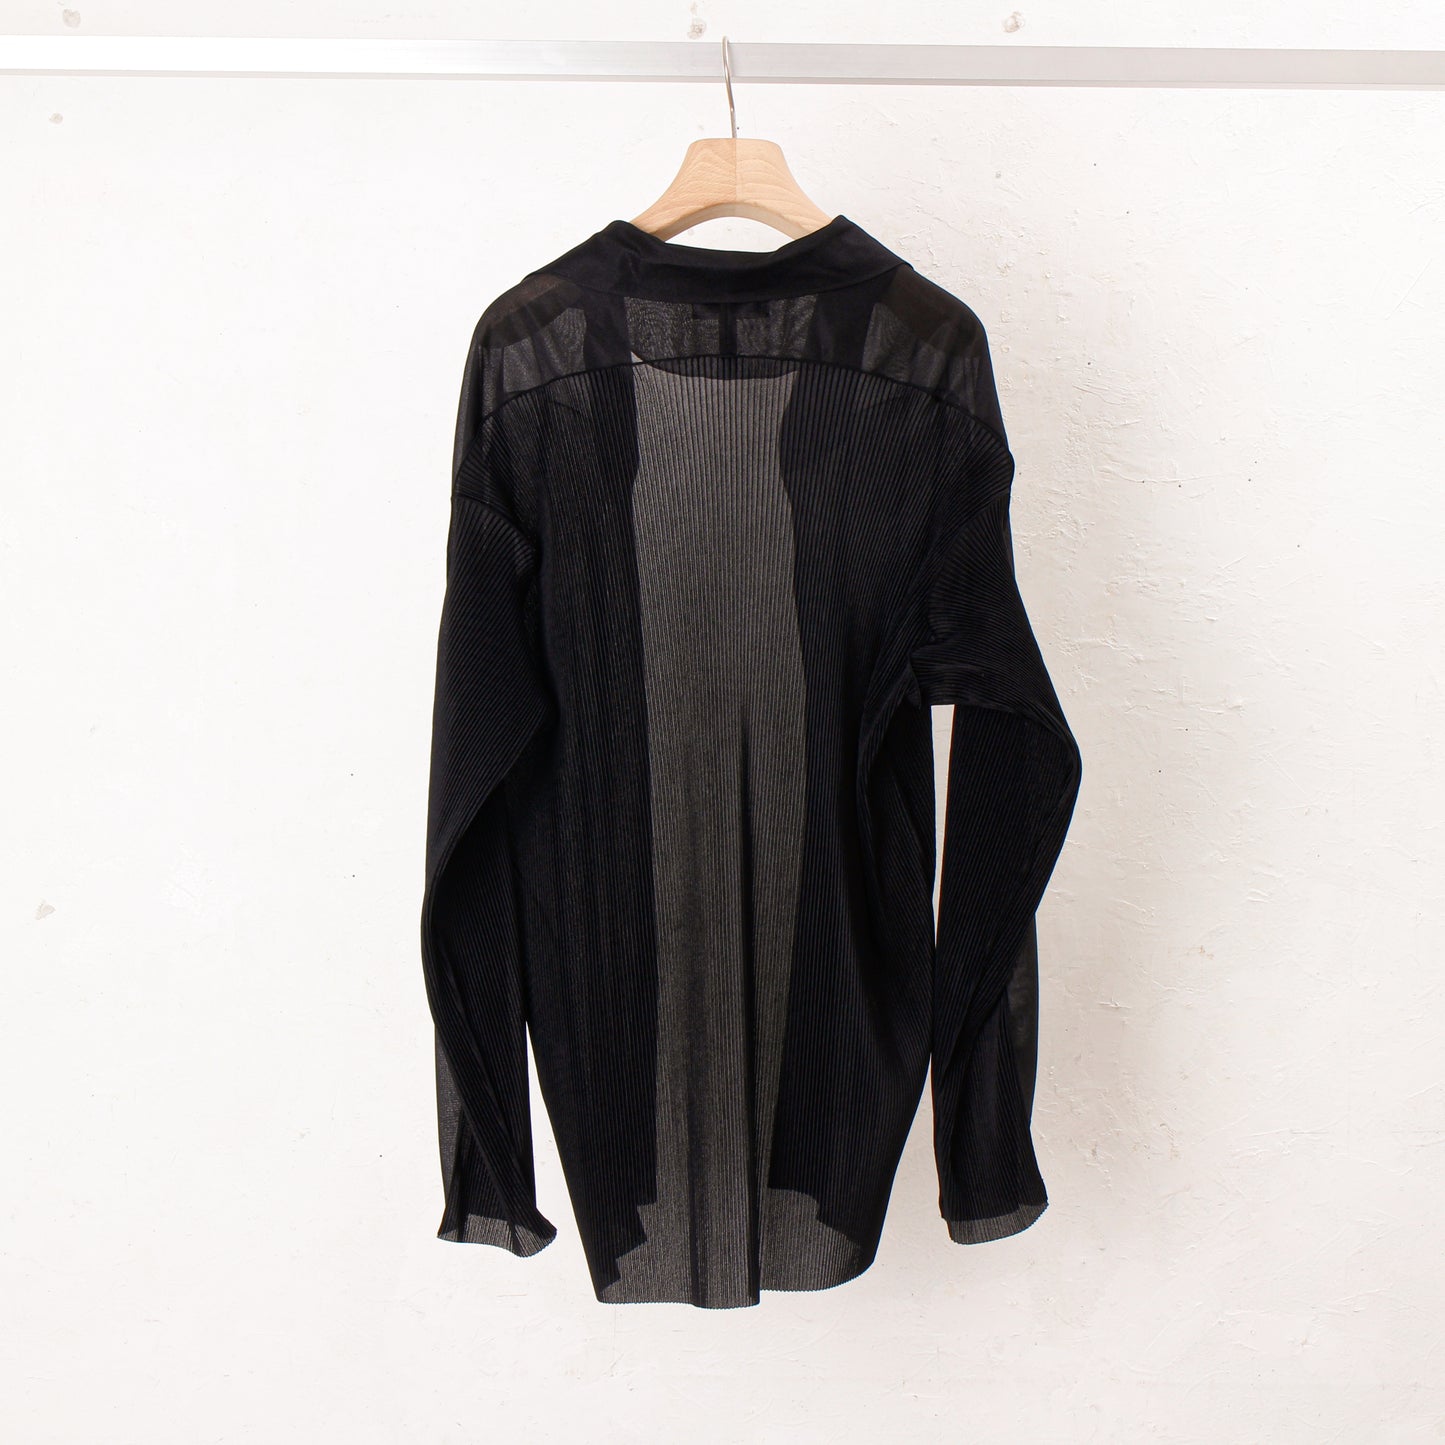 to do kotohayokozawa /Oversized Sheer Shirts / black